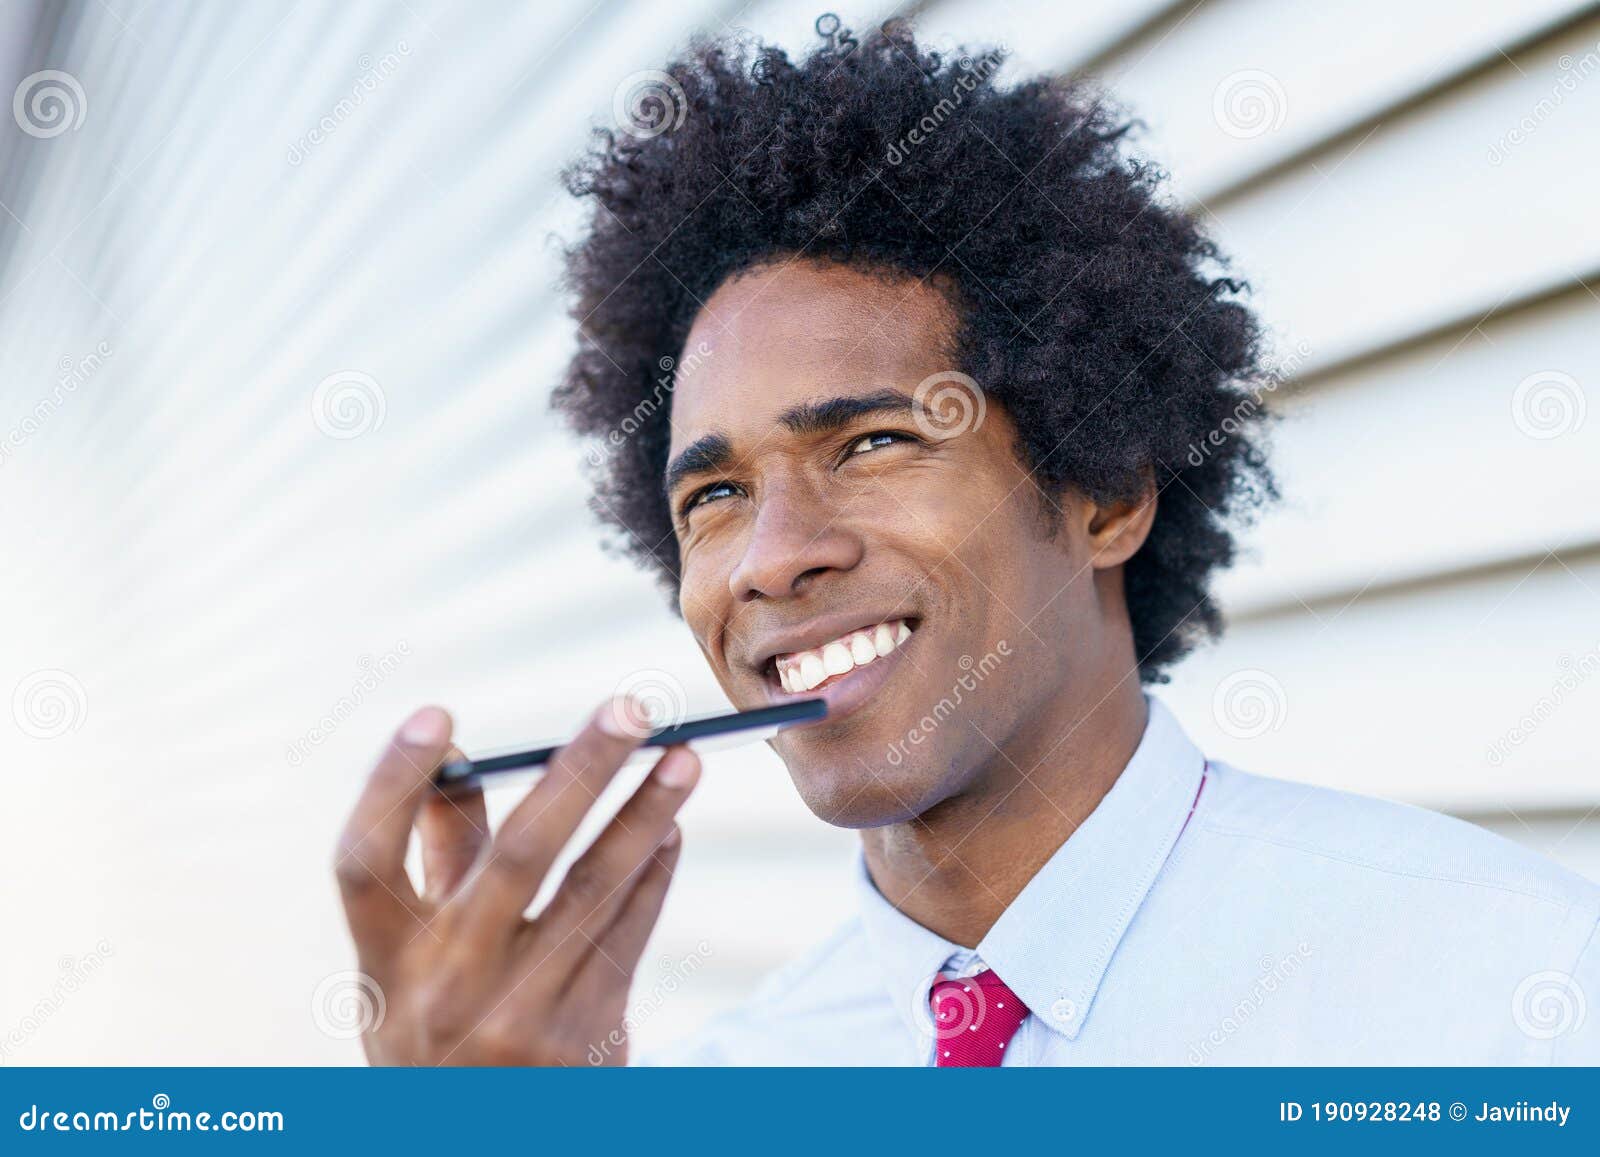 black businessman using a smartphone near an office building